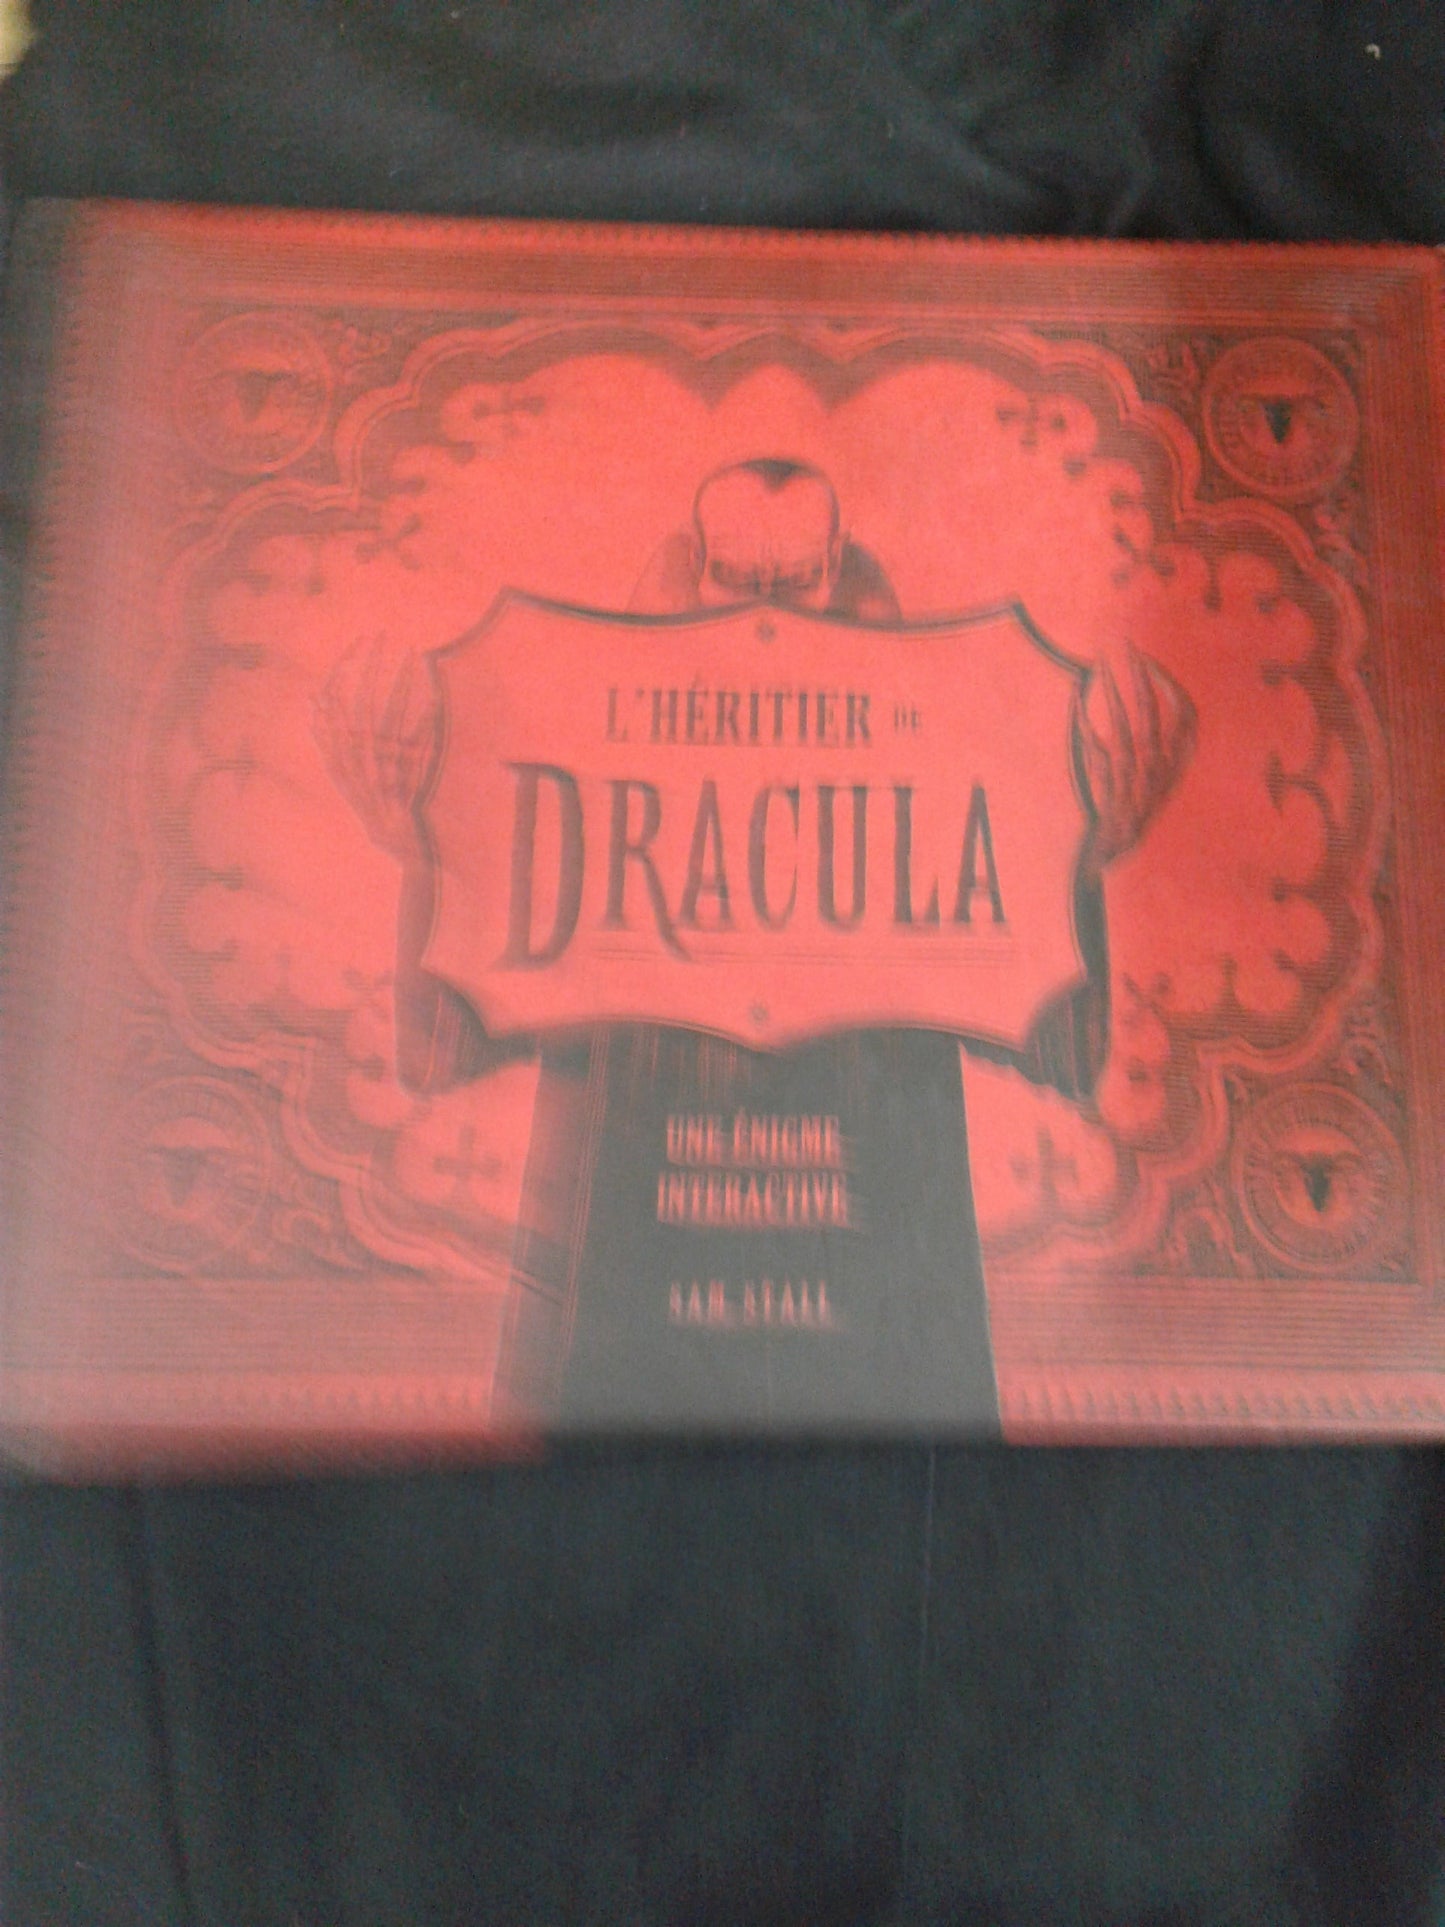 L'héritier de Dracula une énigme interactive